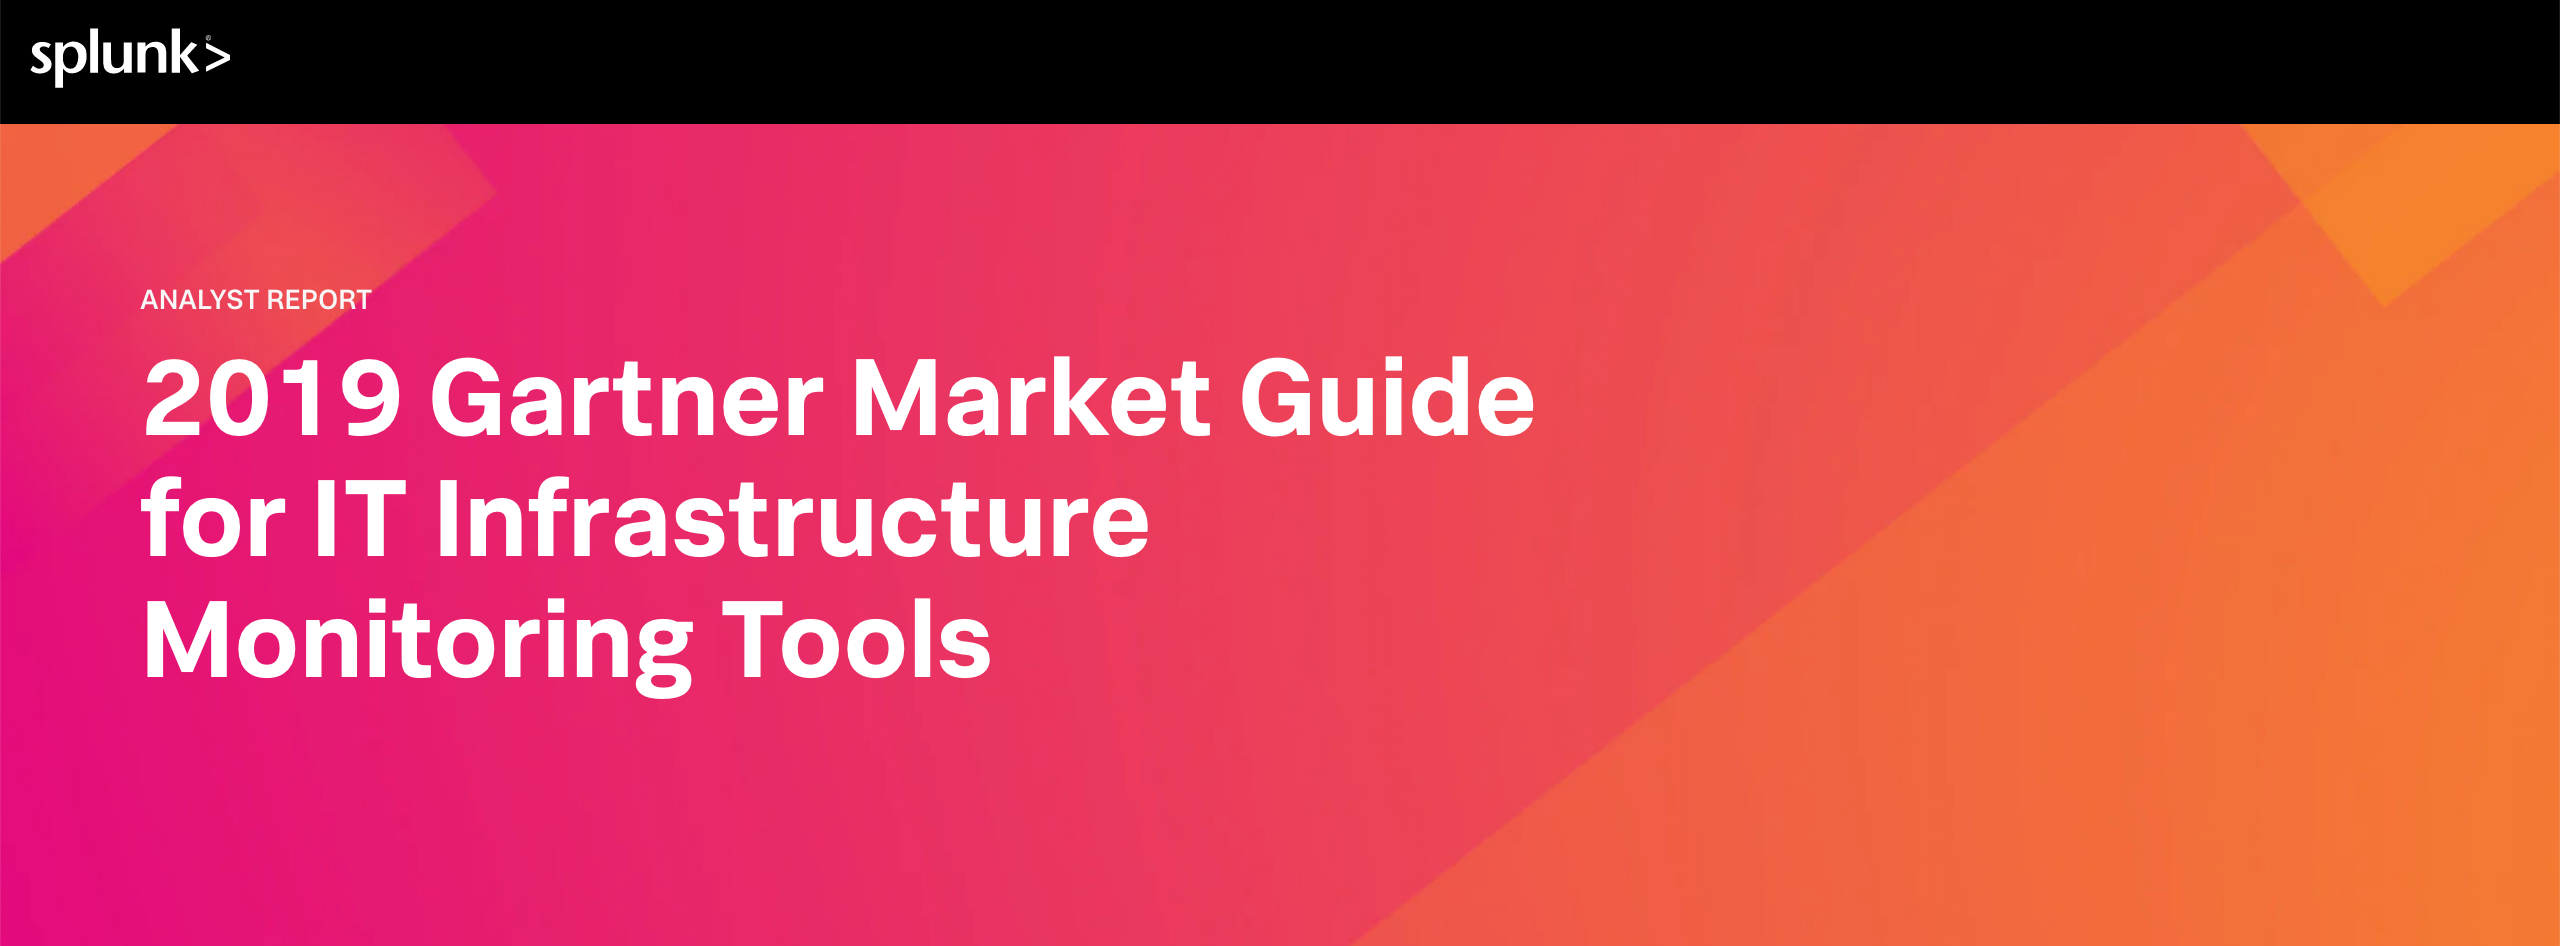 Screenshot 2020 10 16 at 20.24.55 - 2019 Gartner Market Guide for IT Infrastructure Monitoring Tools